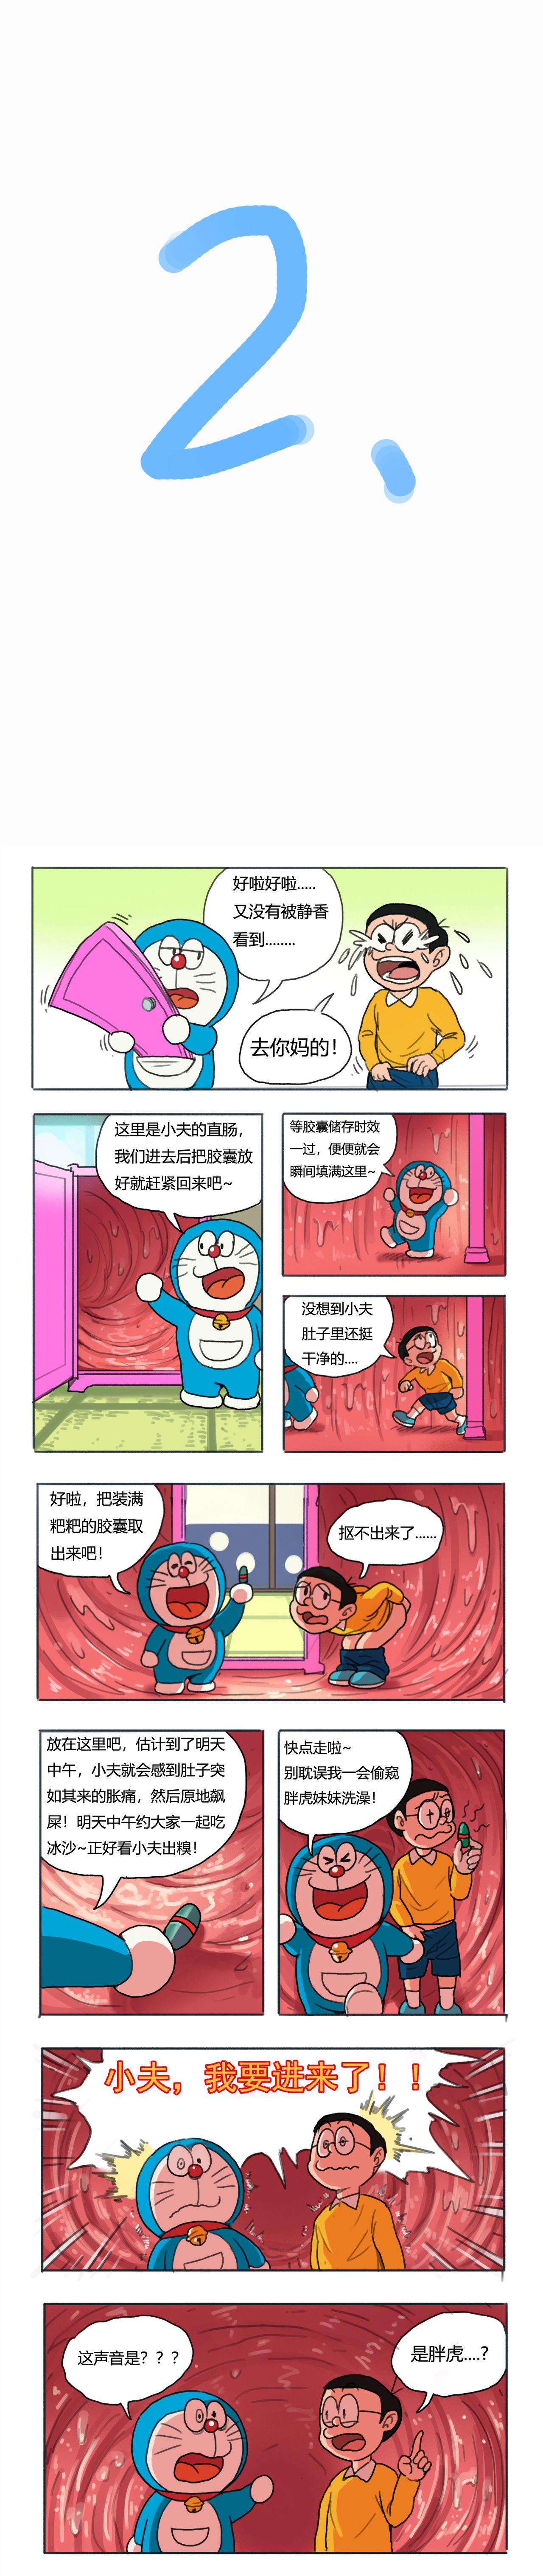 Ass 哆啦AV梦 - Doraemon Telugu - Page 2